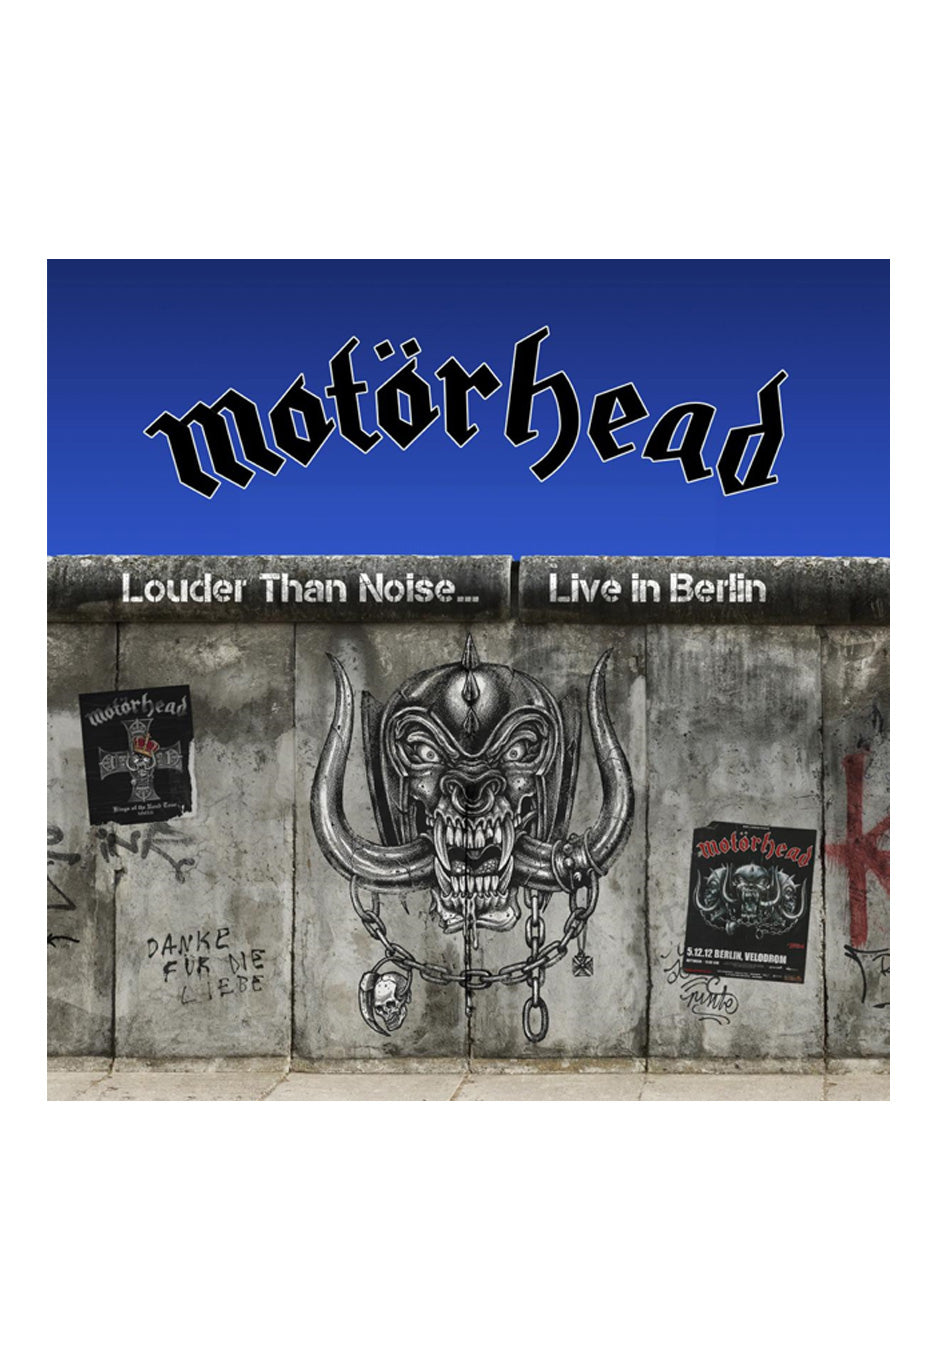 Motörhead - Louder Than Noise...Live in Berlin - Digipak CD + DVD